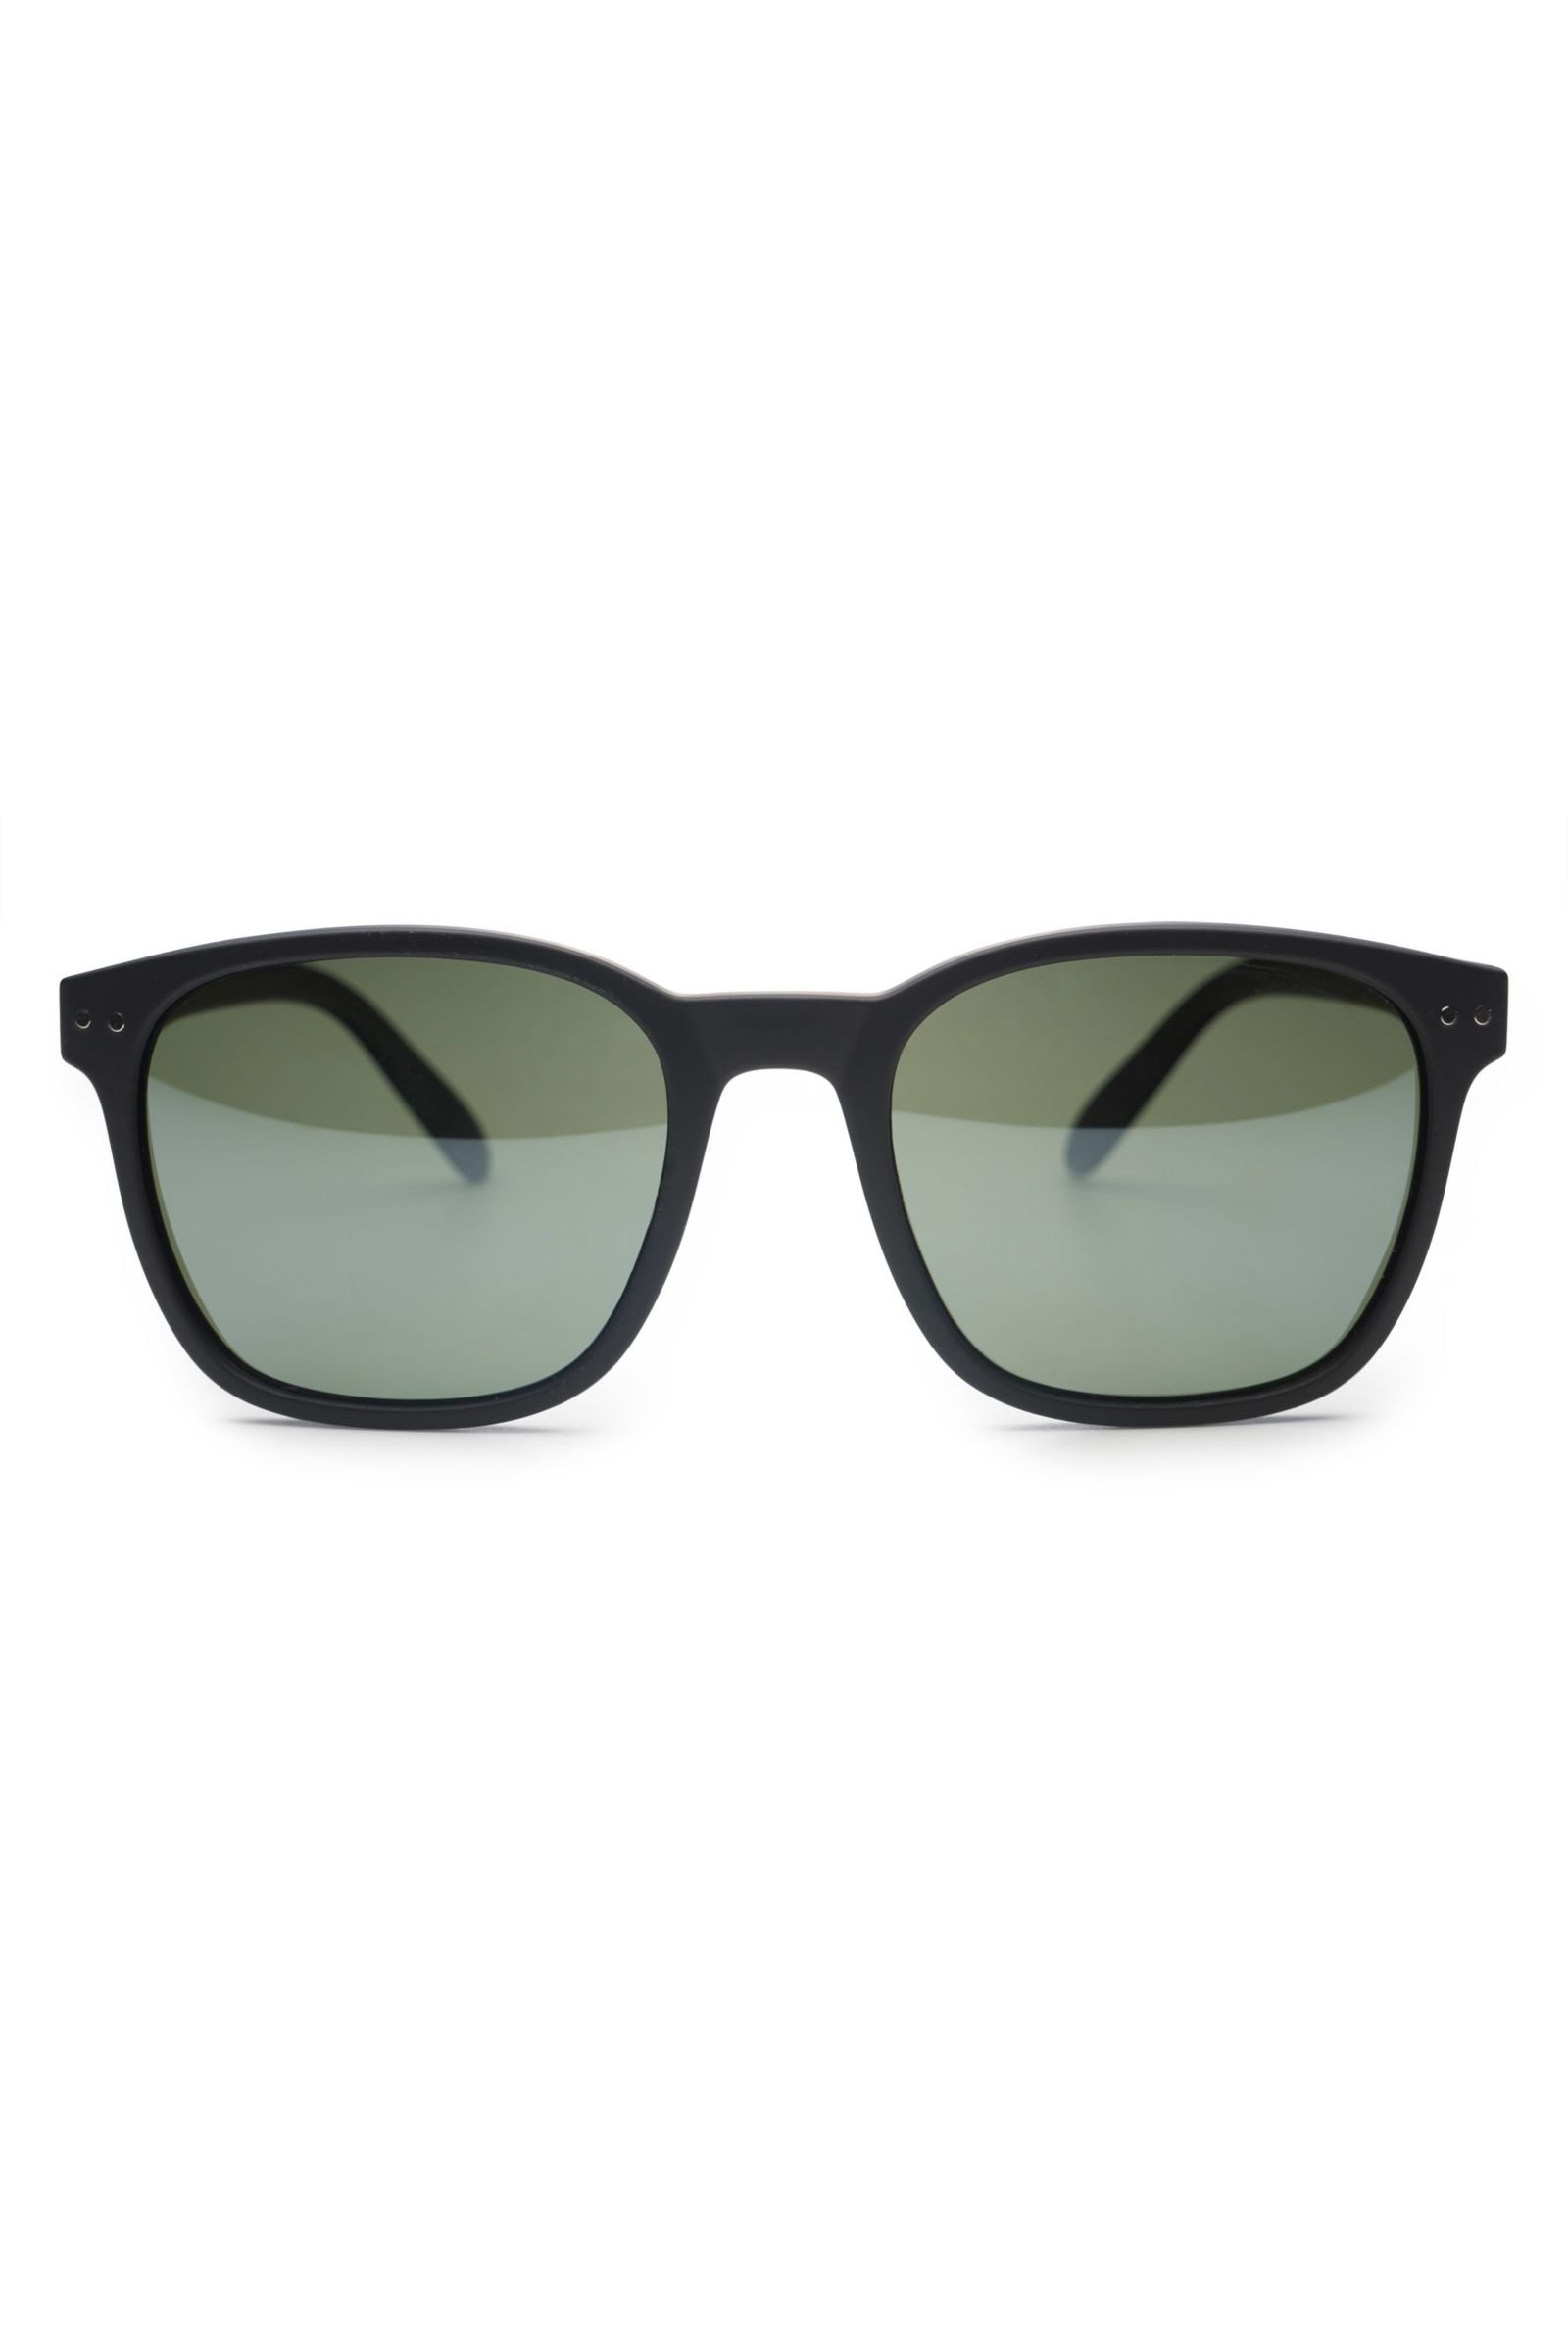 Sunglasses 'Sun Nautic' black/green